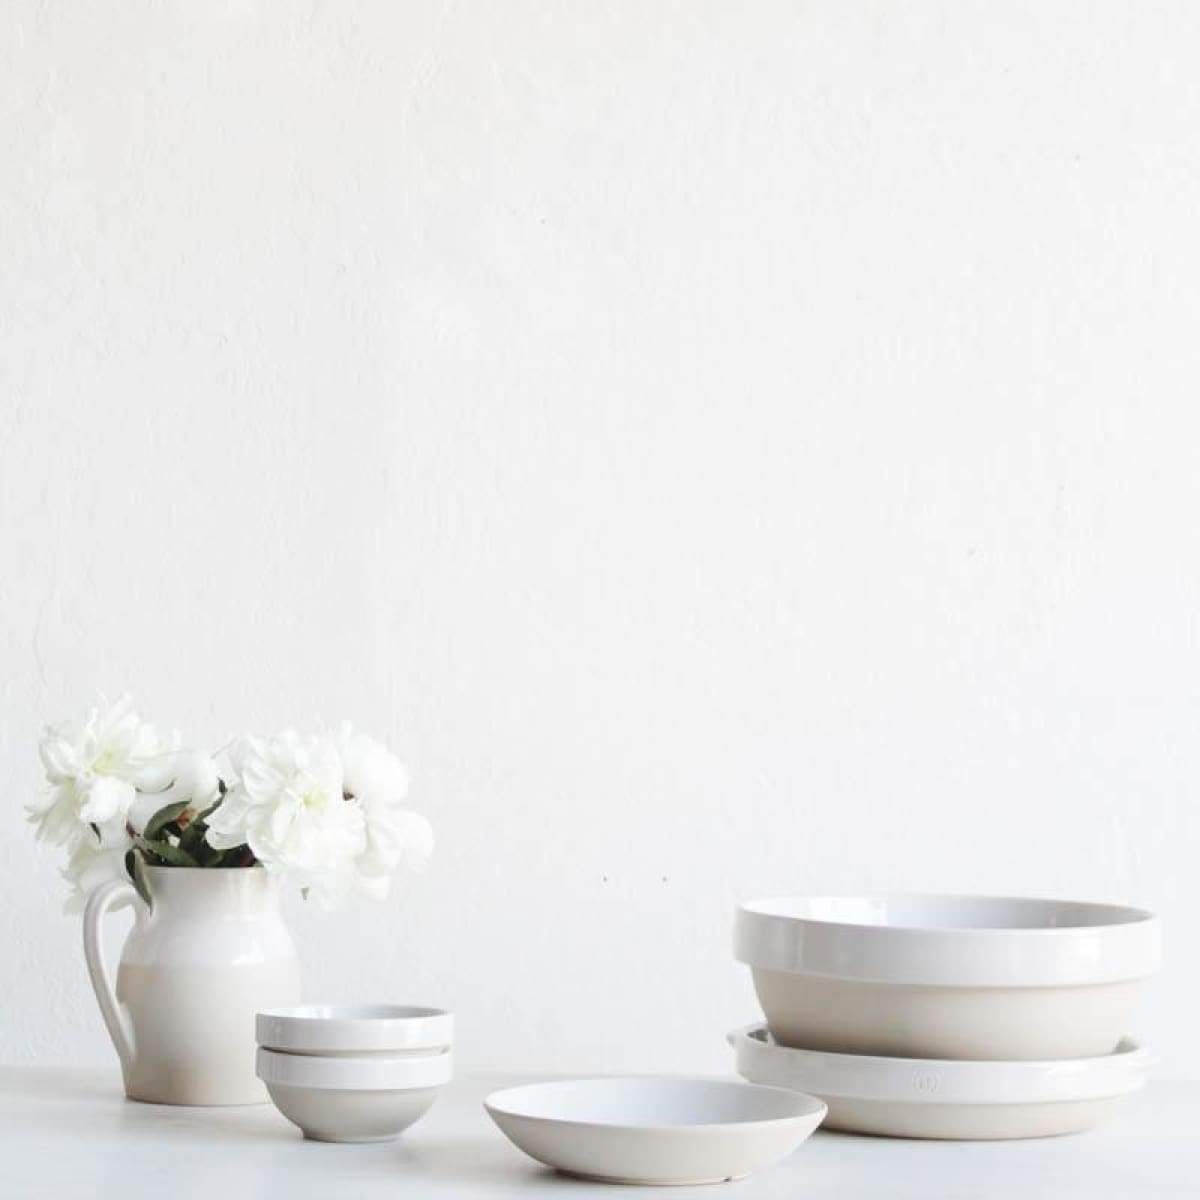 Manufacture de Digoin French Ceramic Mixing Bowls, 2 Colors